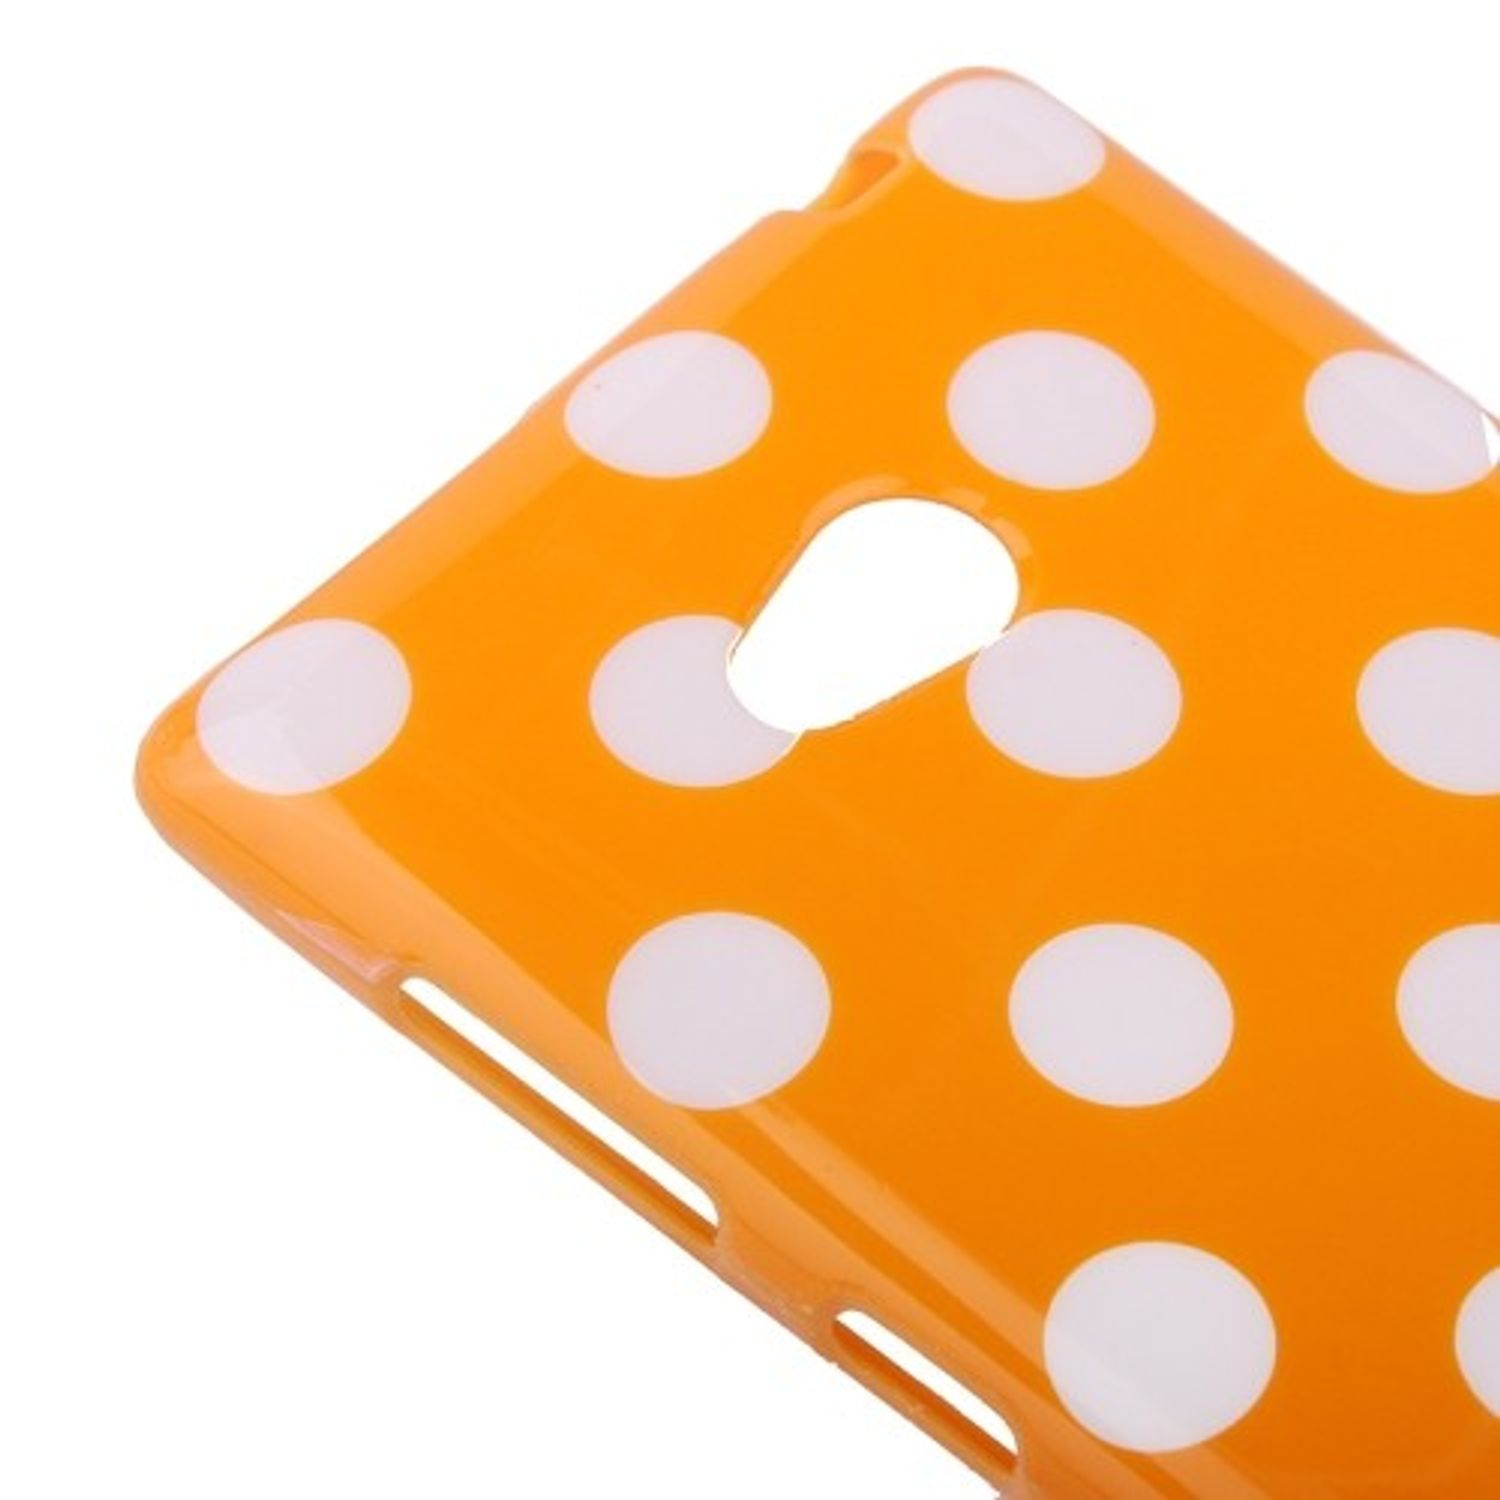 KÖNIG DESIGN 720, Orange Backcover, Lumia Handyhülle, Nokia